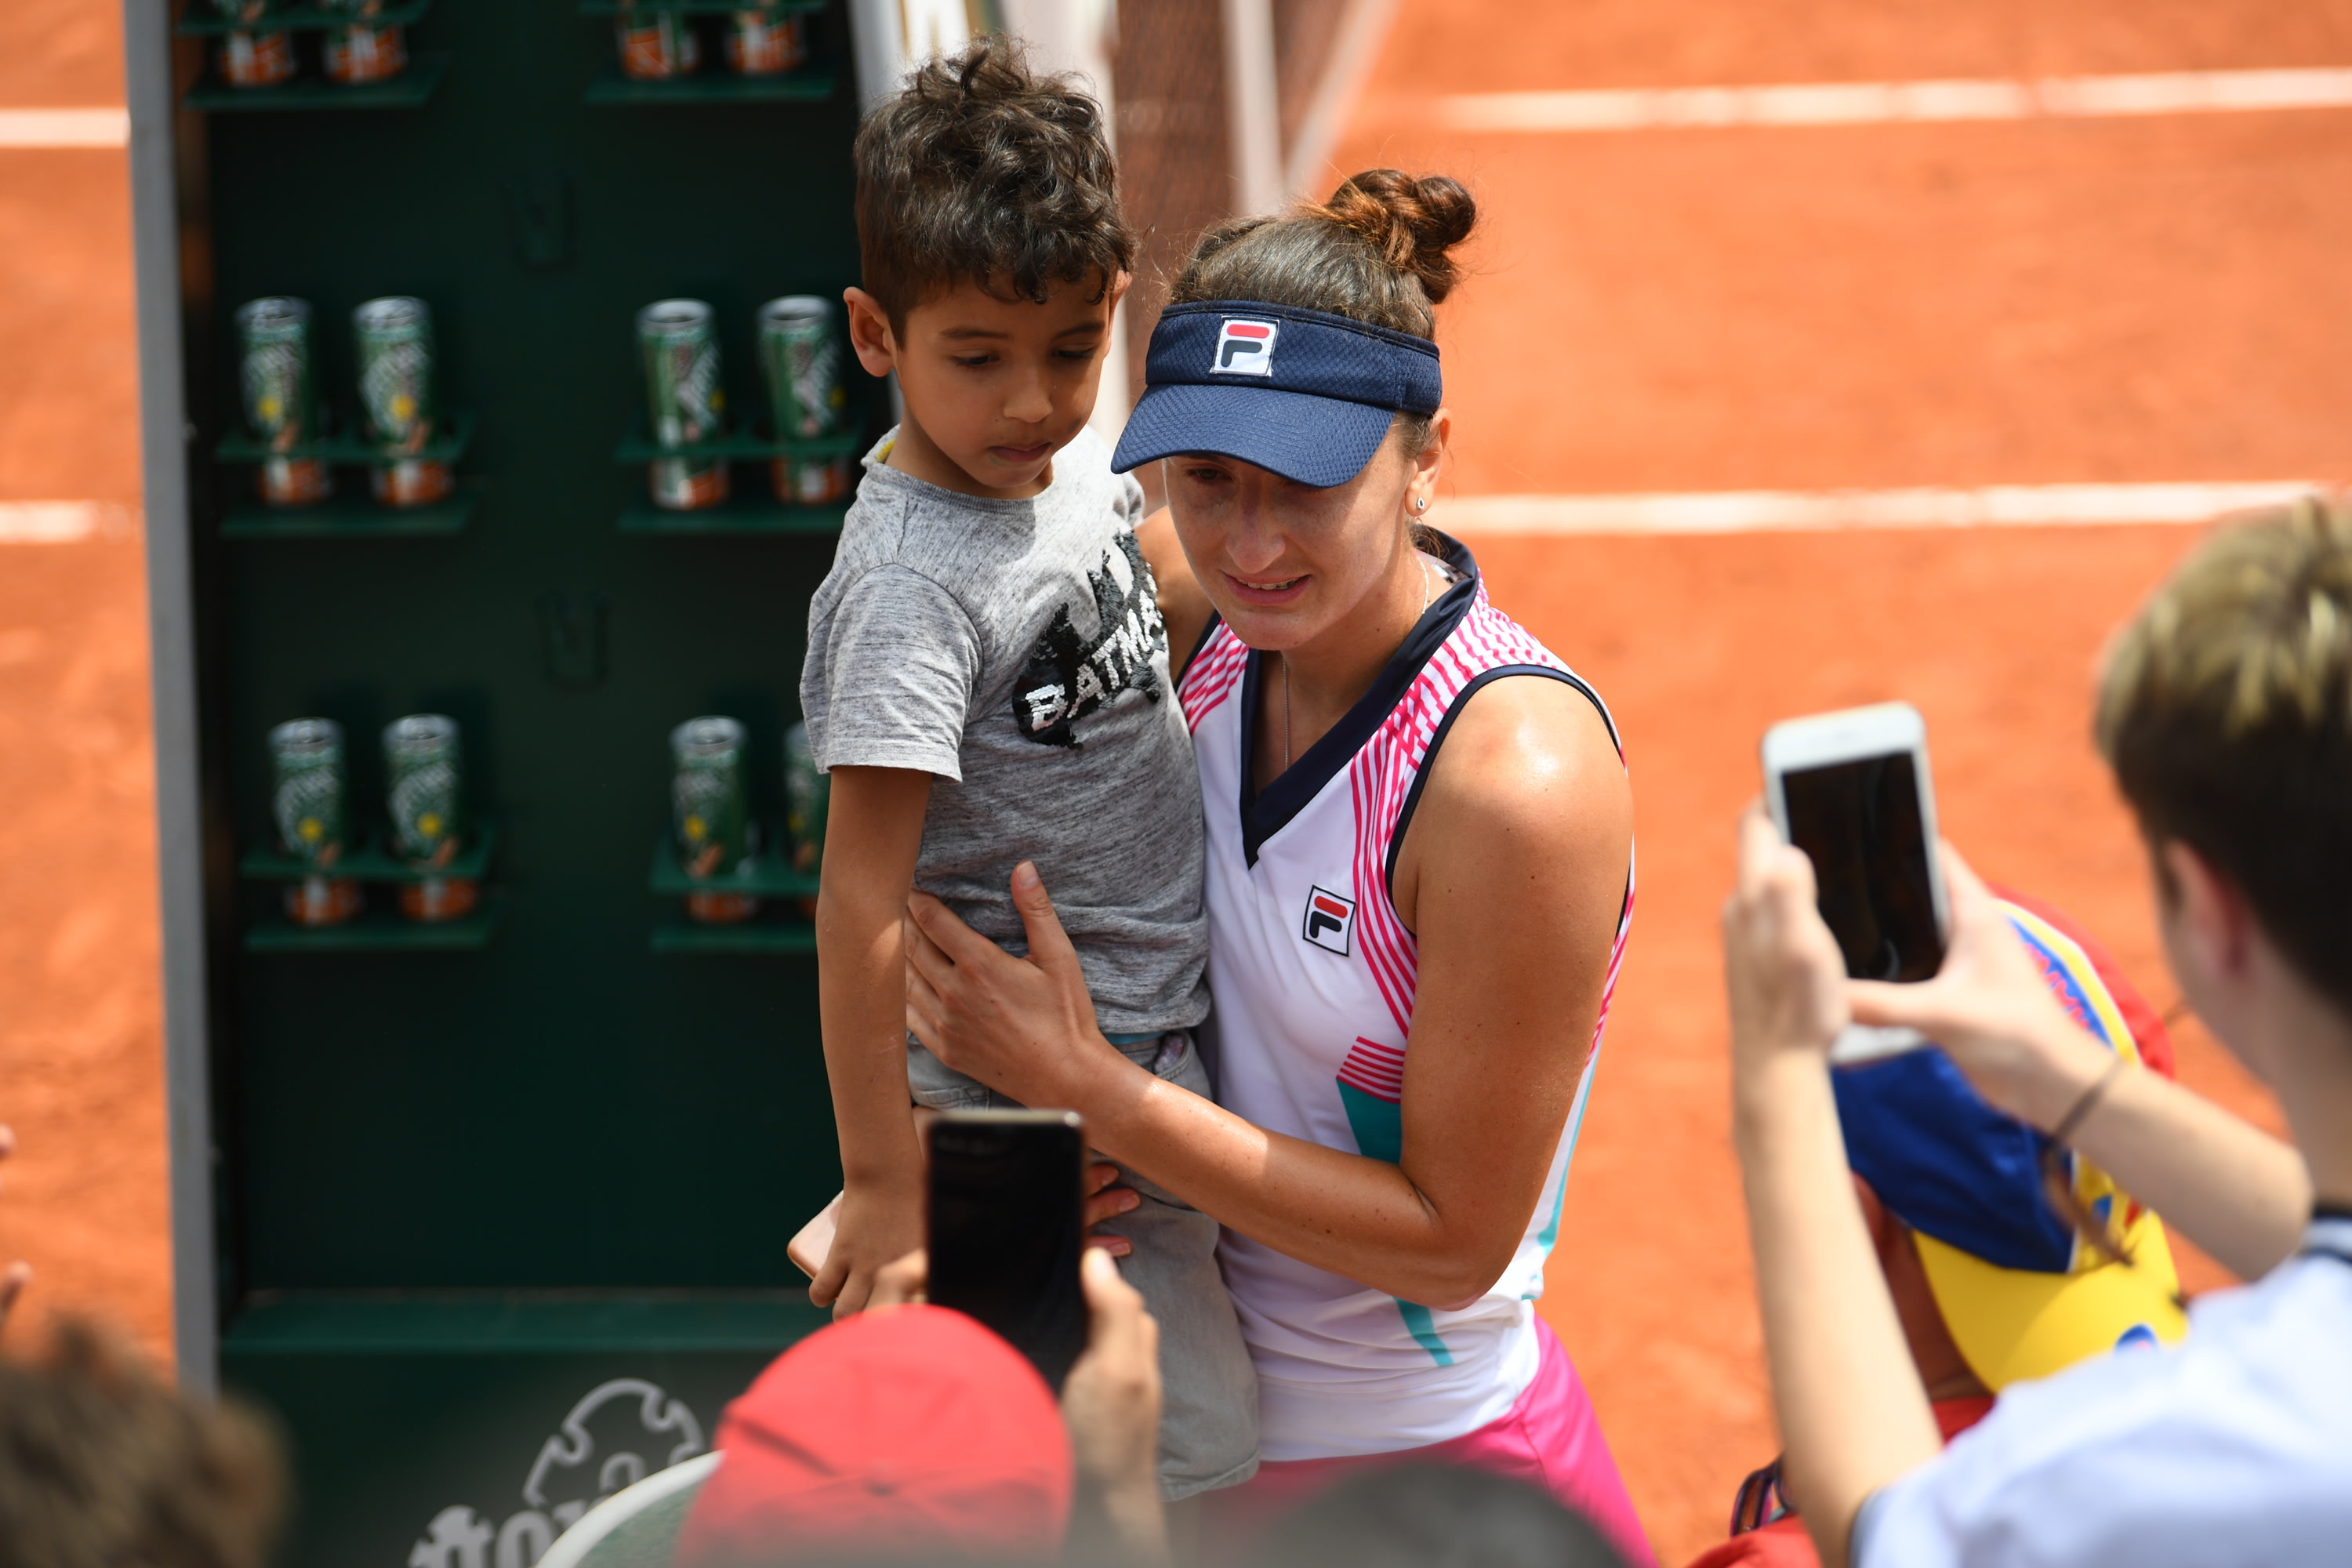 Irina-Camelia Begu narrowly avoids Roland Garros default after outburst sends racquet flying off court